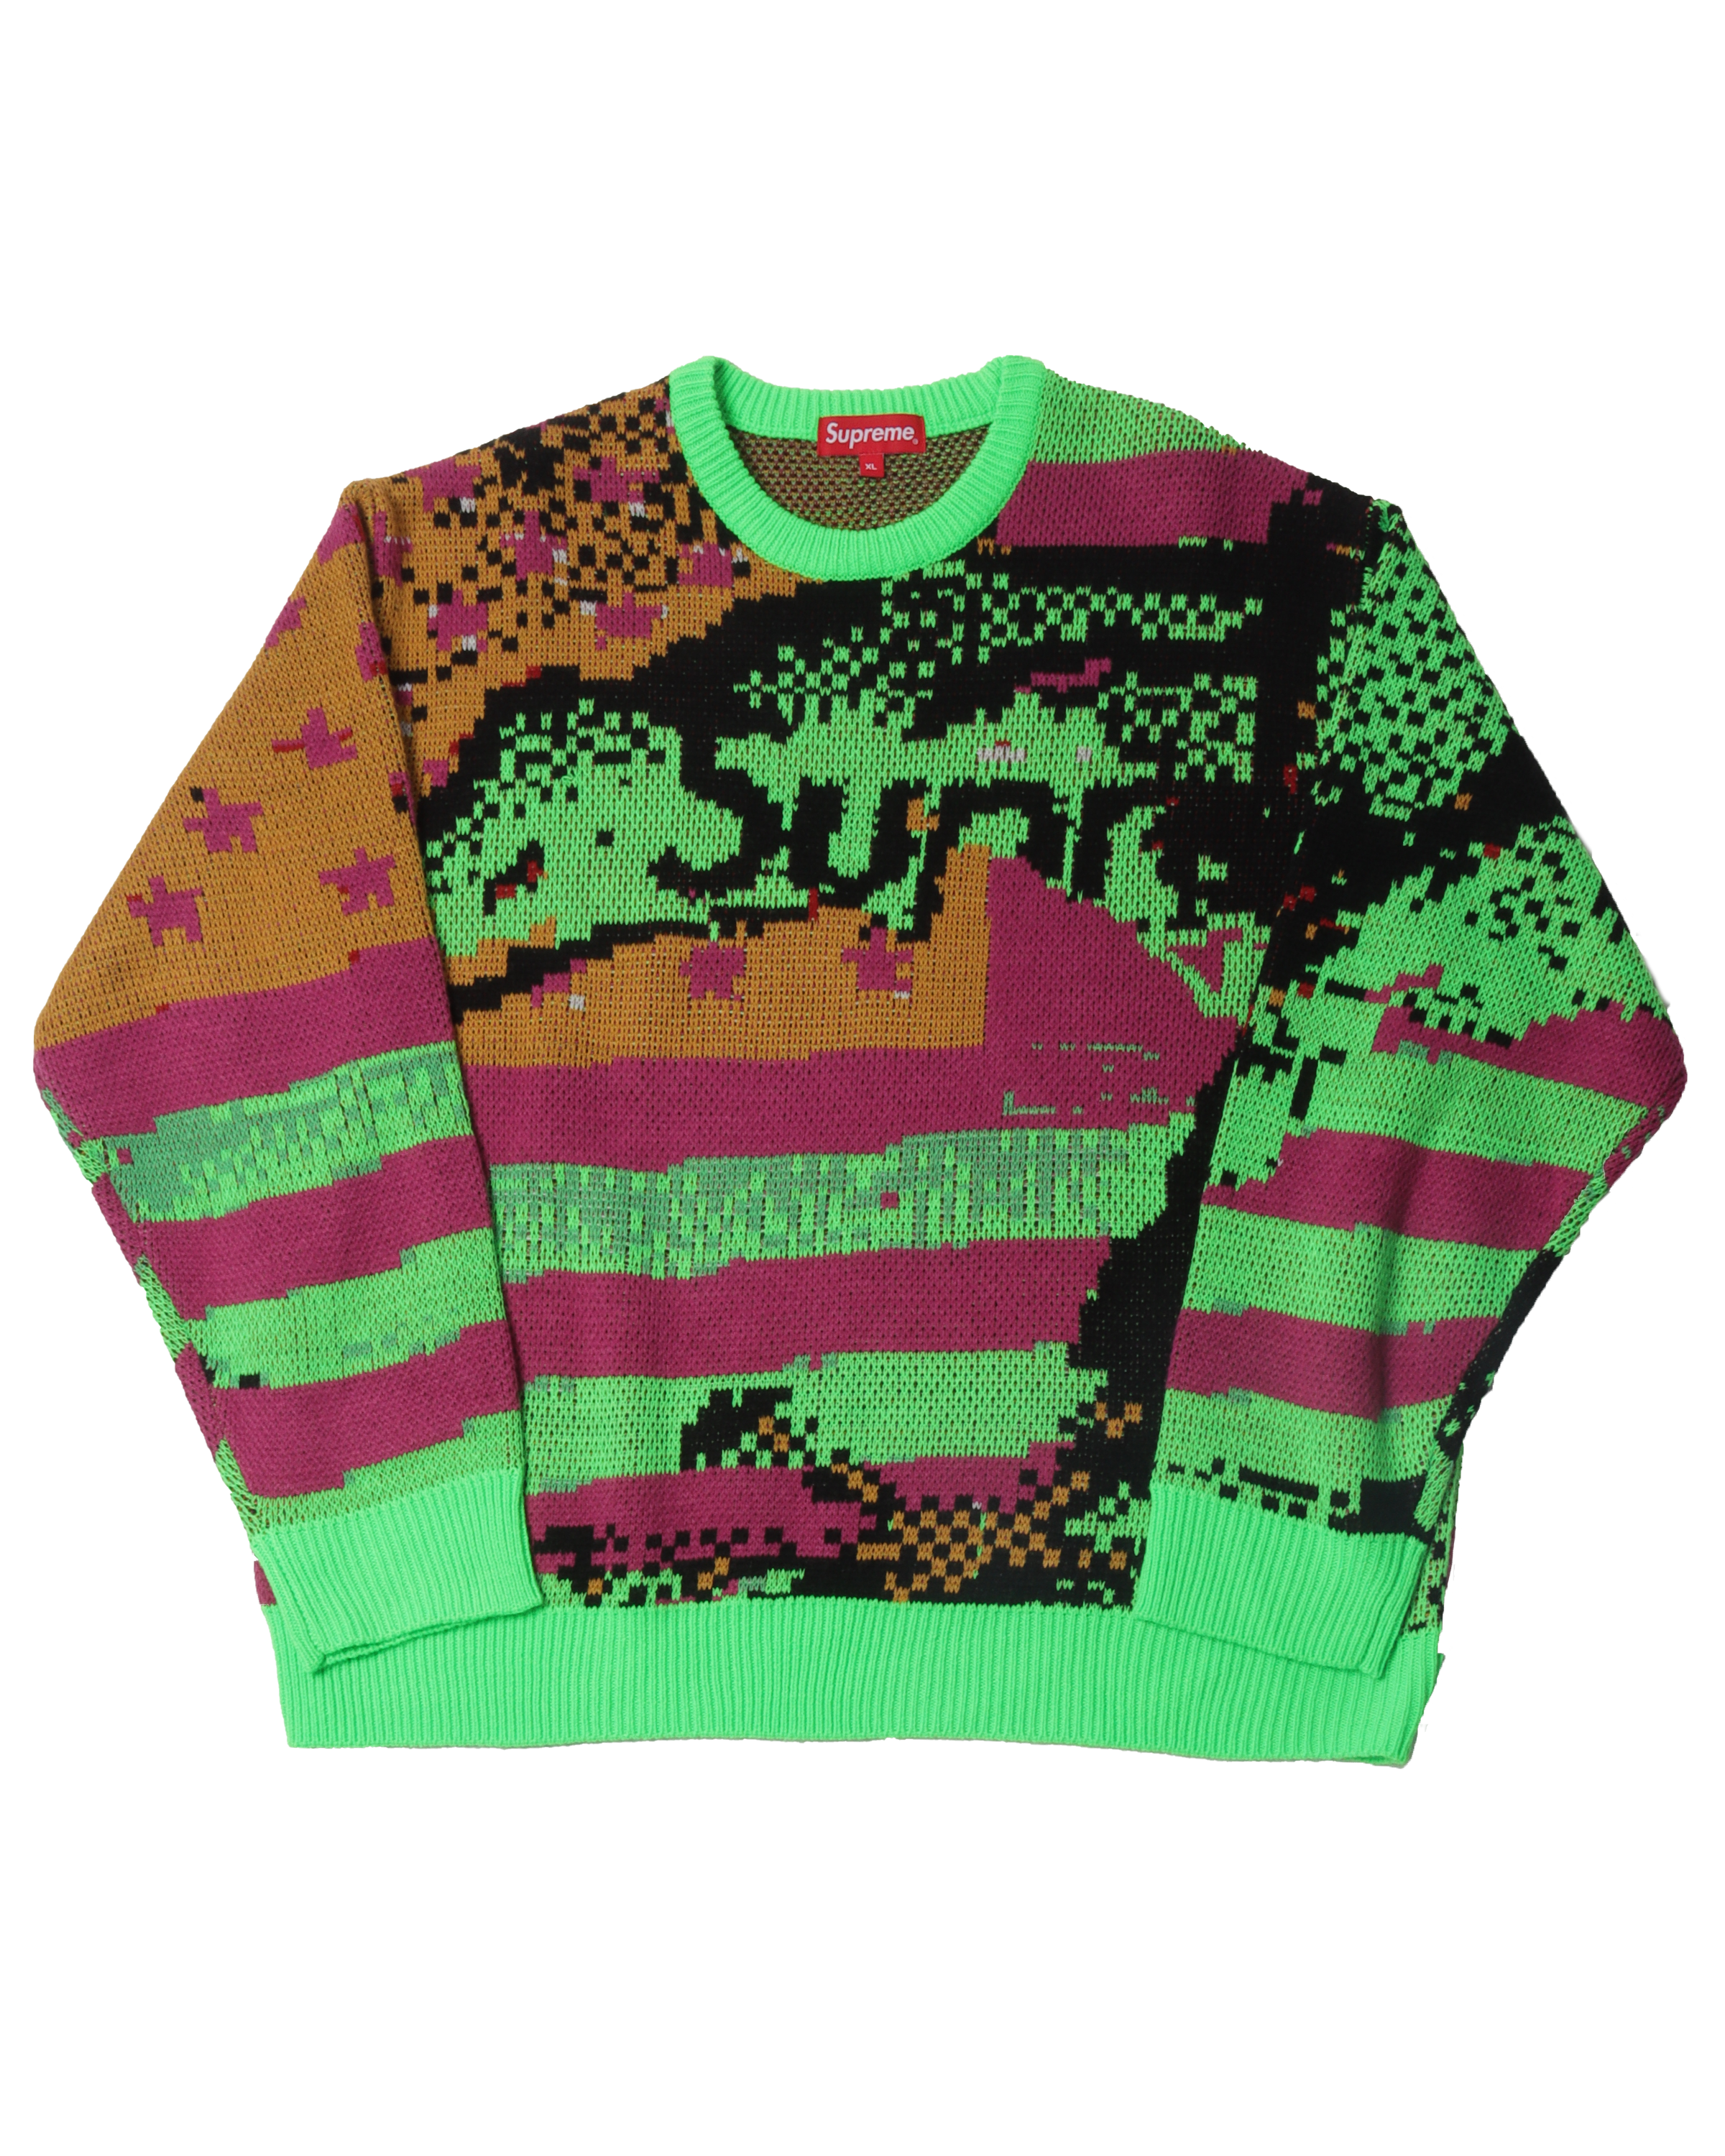 SALE2023】 Supreme Digital Flag Sweaterデジタルフラッグセーター